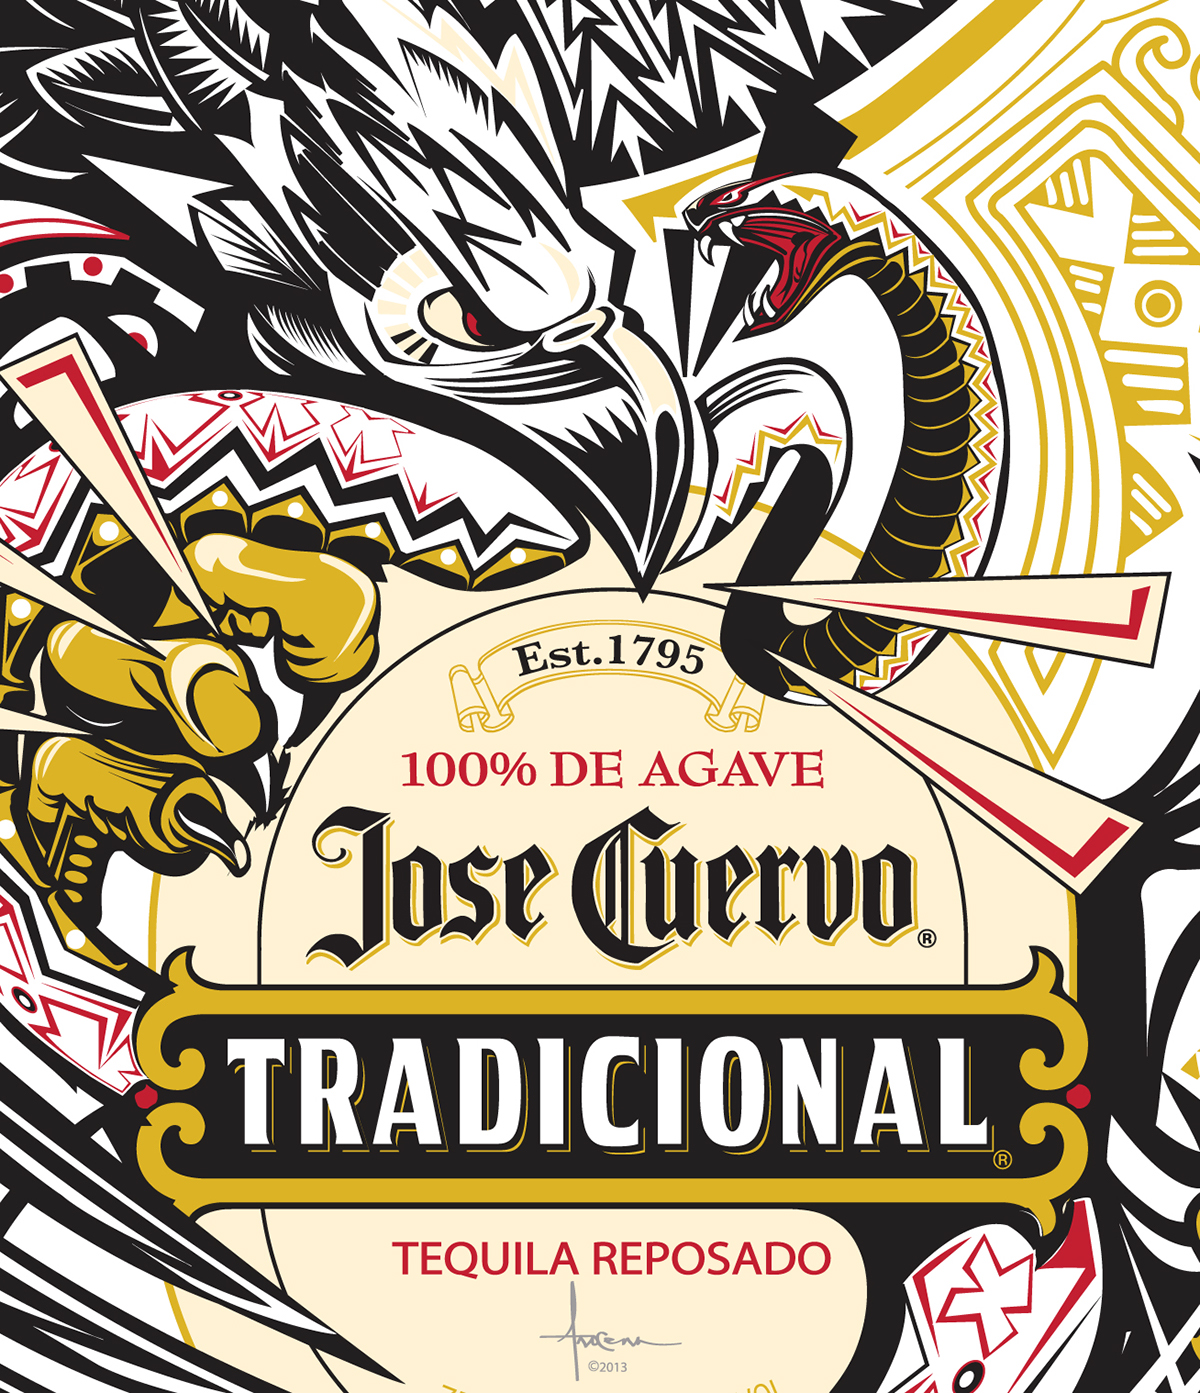 jose cuervo Tradicional bottle wrap vector orlando arocena blanco resposado Tequila eagle snake grito mexico Mexicano pantone